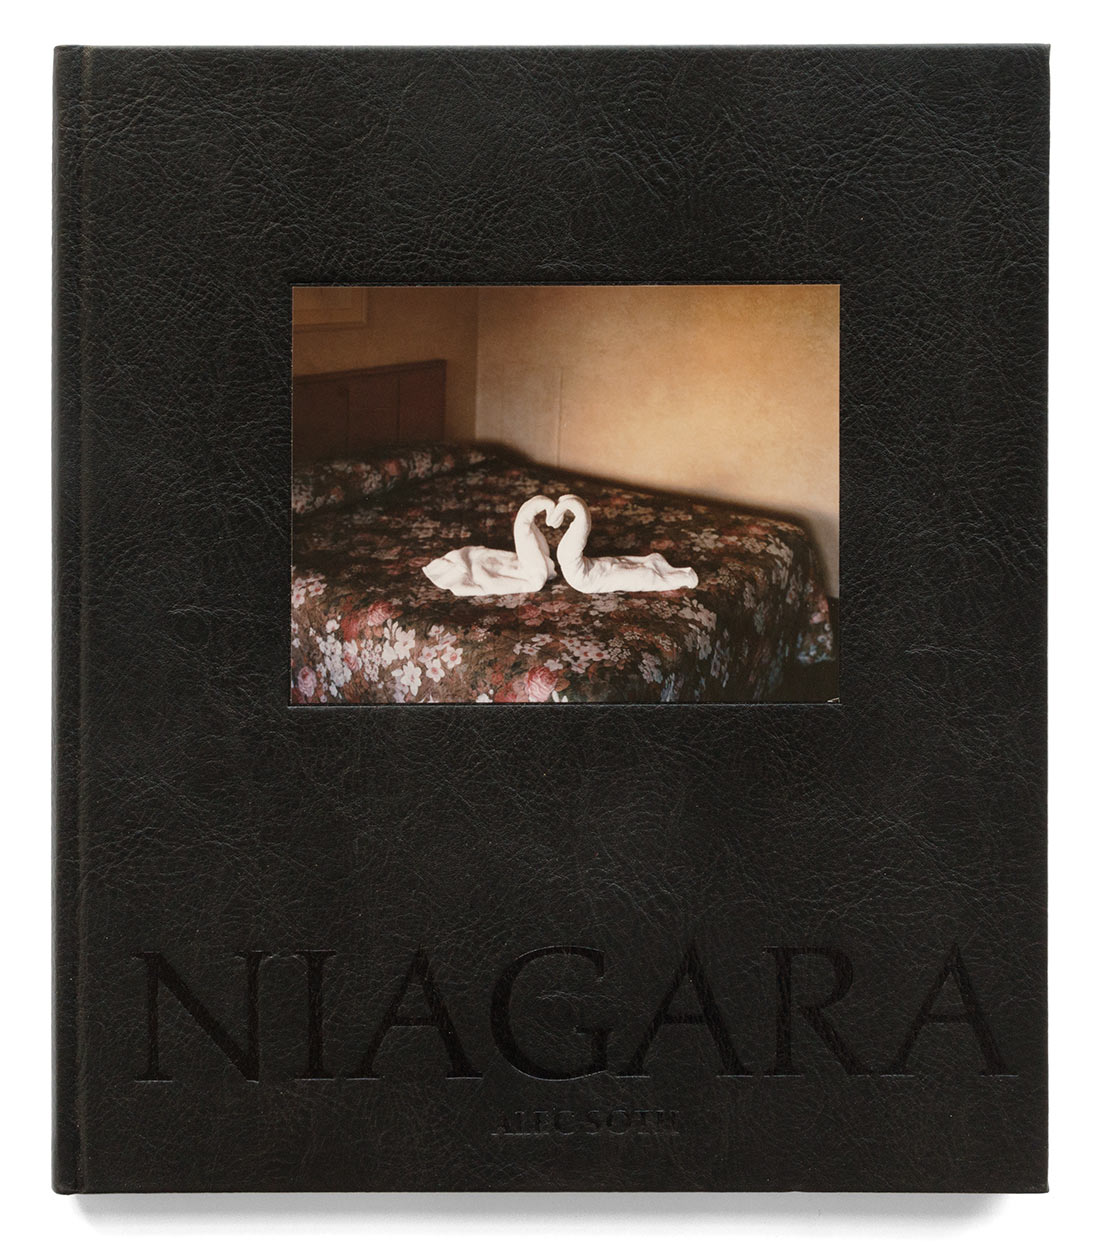 NIAGARA. Steidl, 2006